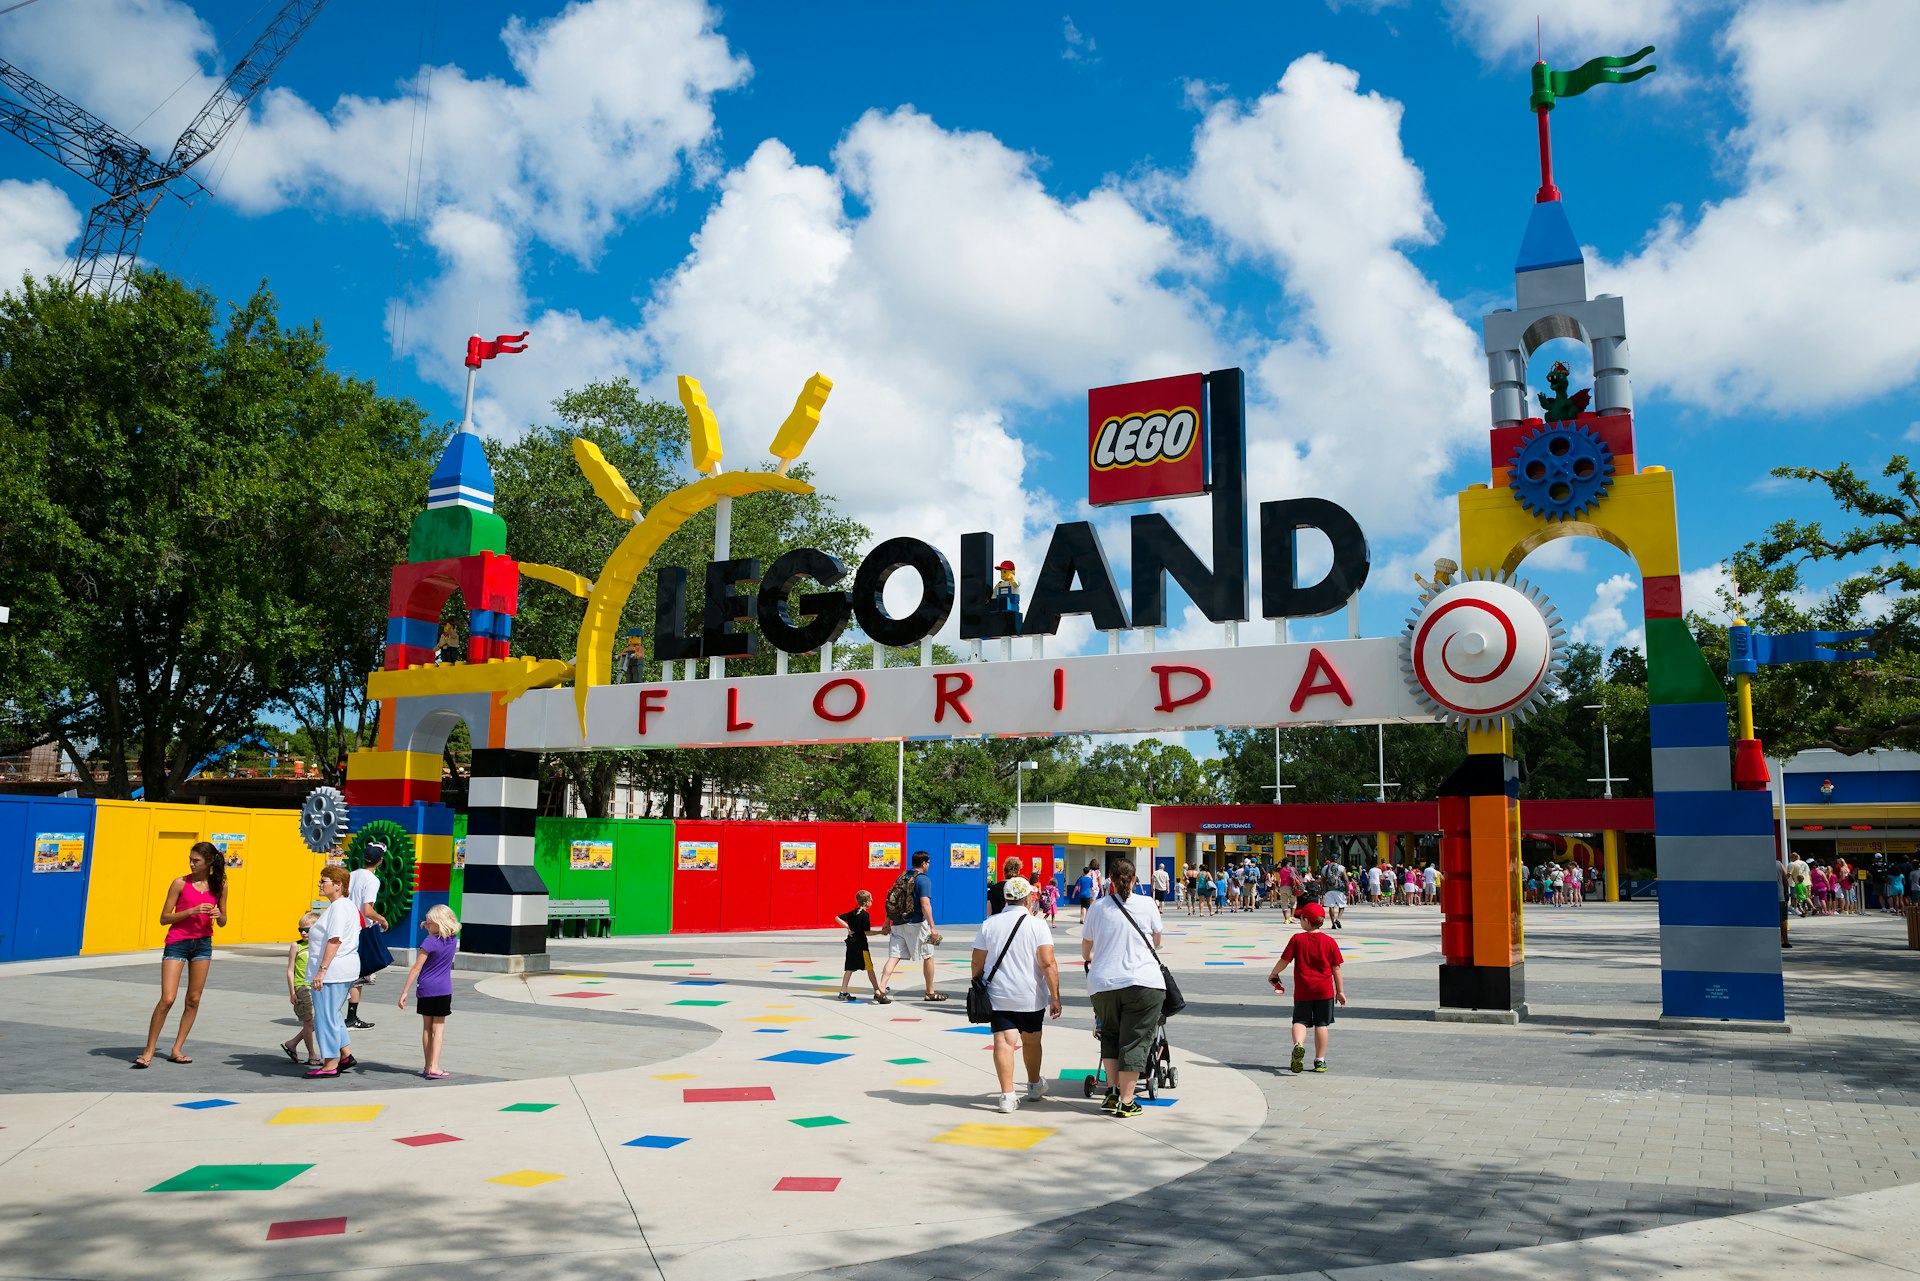 The entrance to Legoland Florida